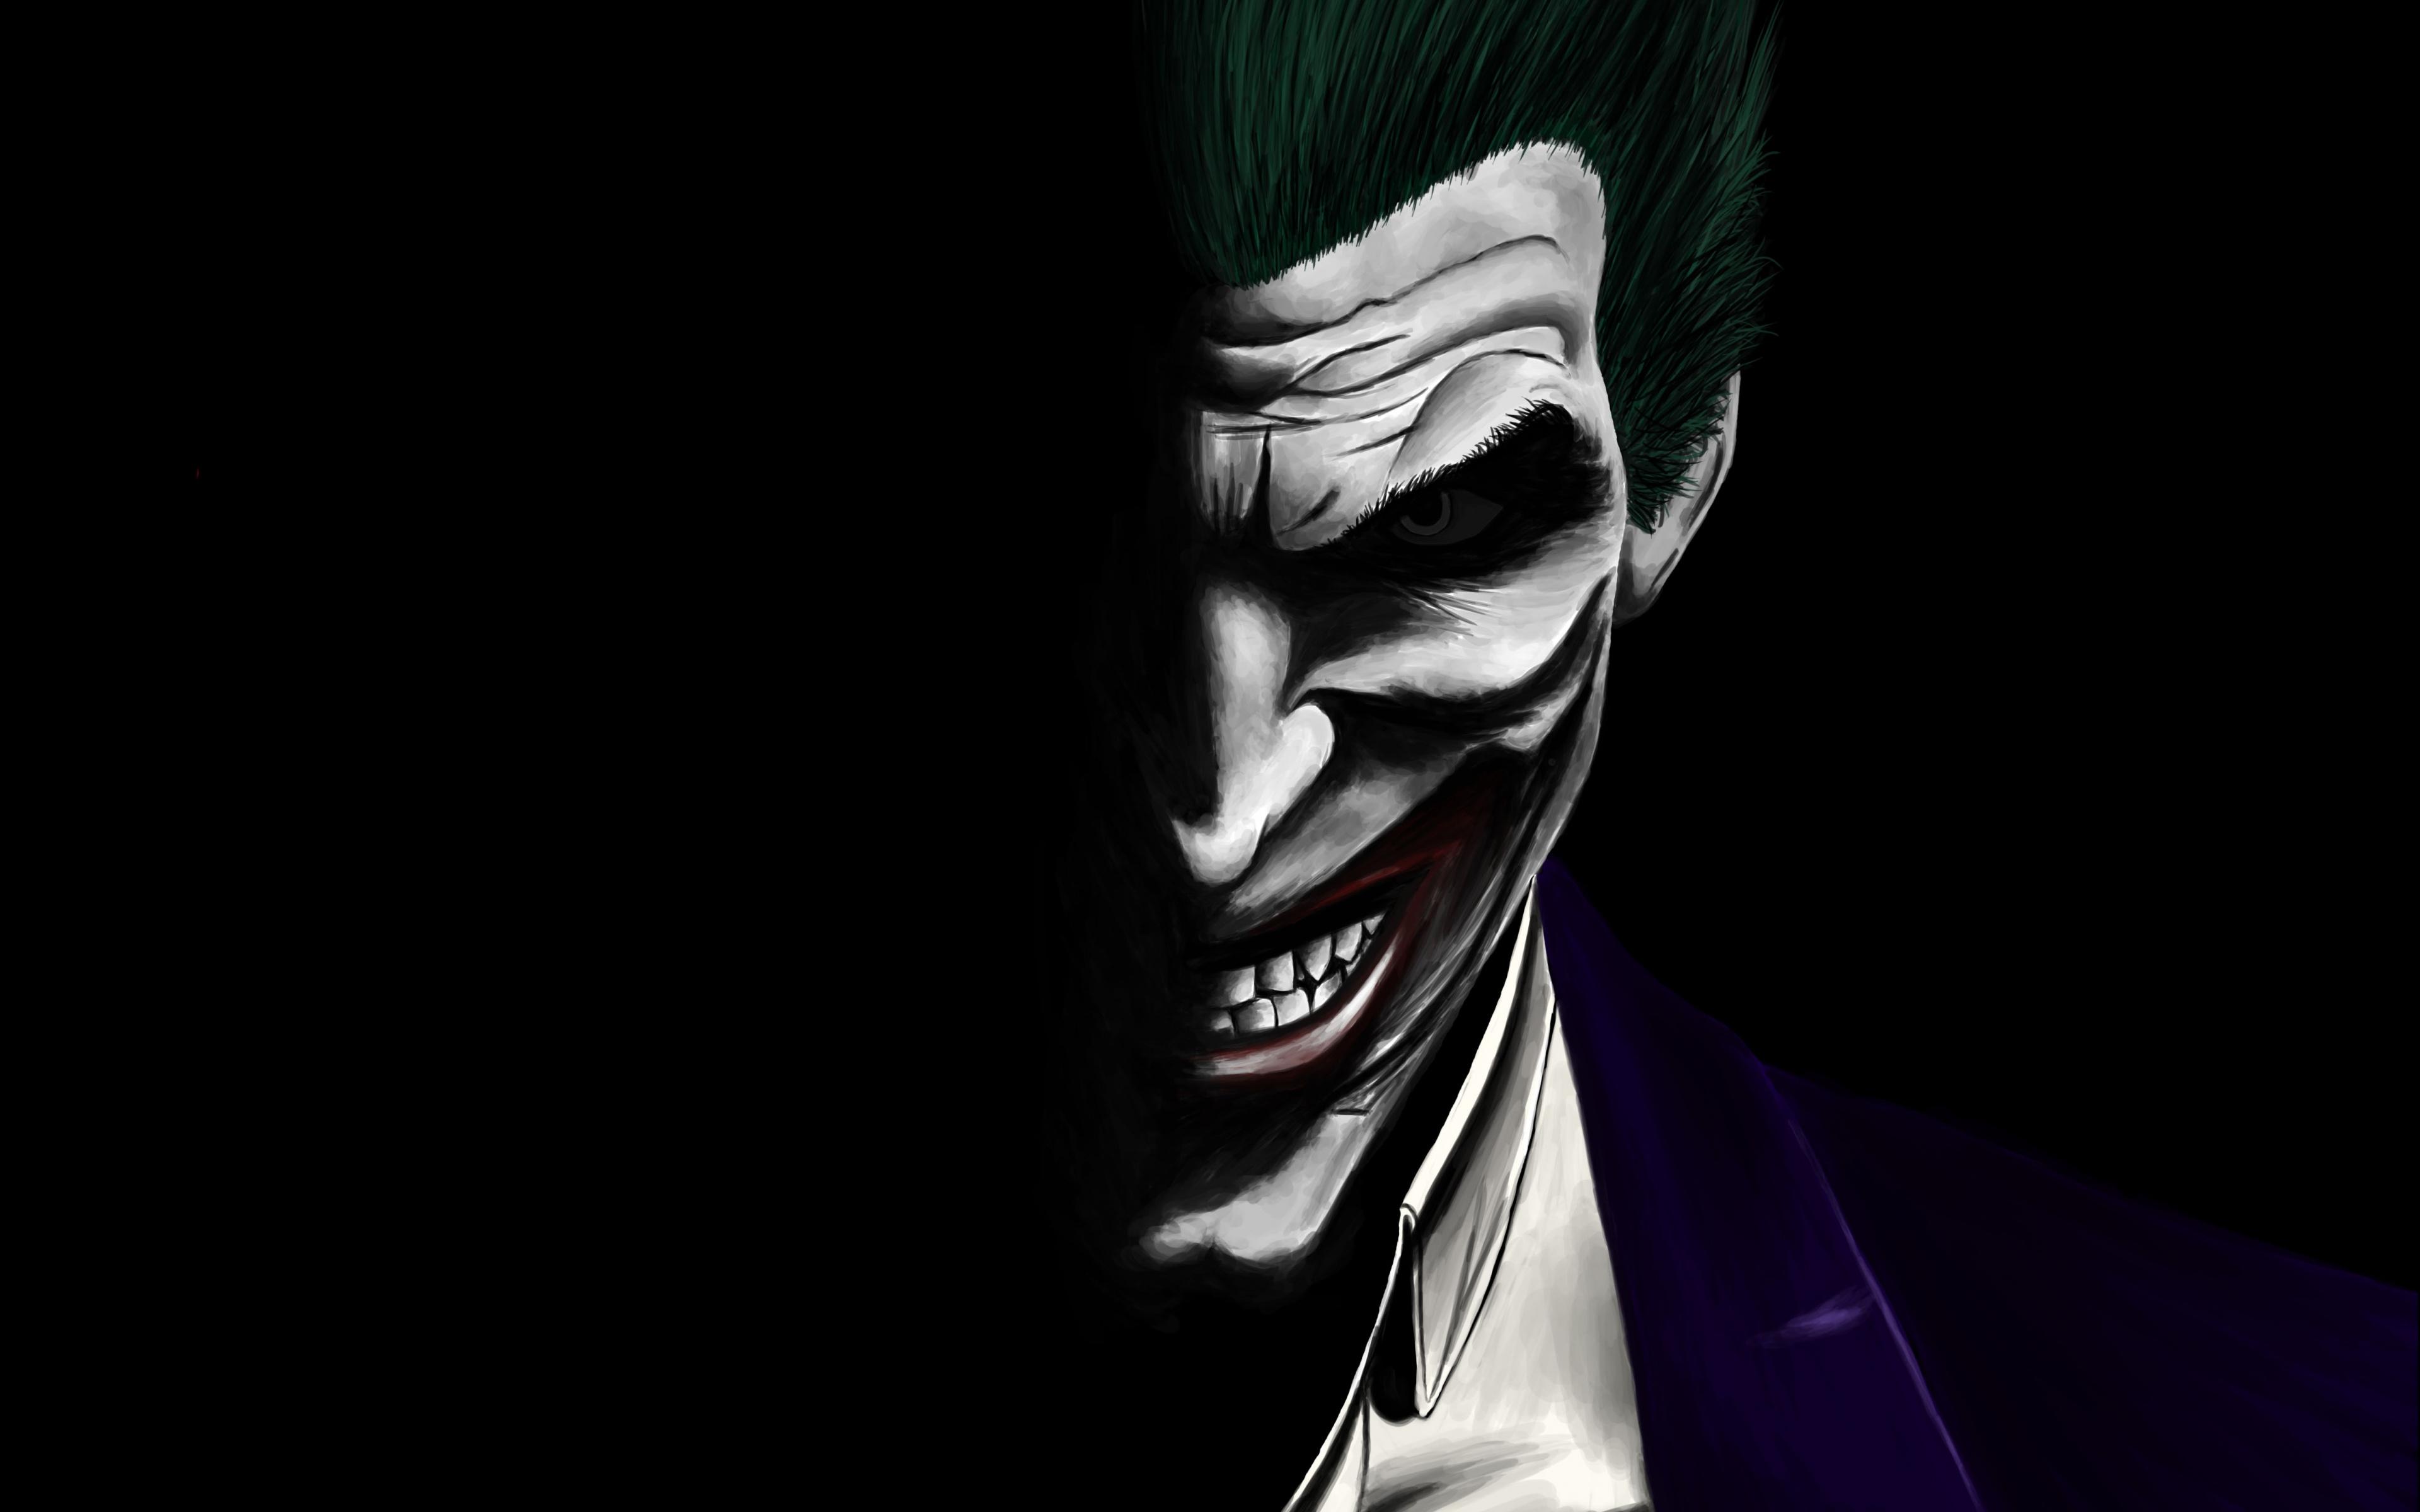 Joker Hd Wallpaper 4k Black And White - Get Images Four